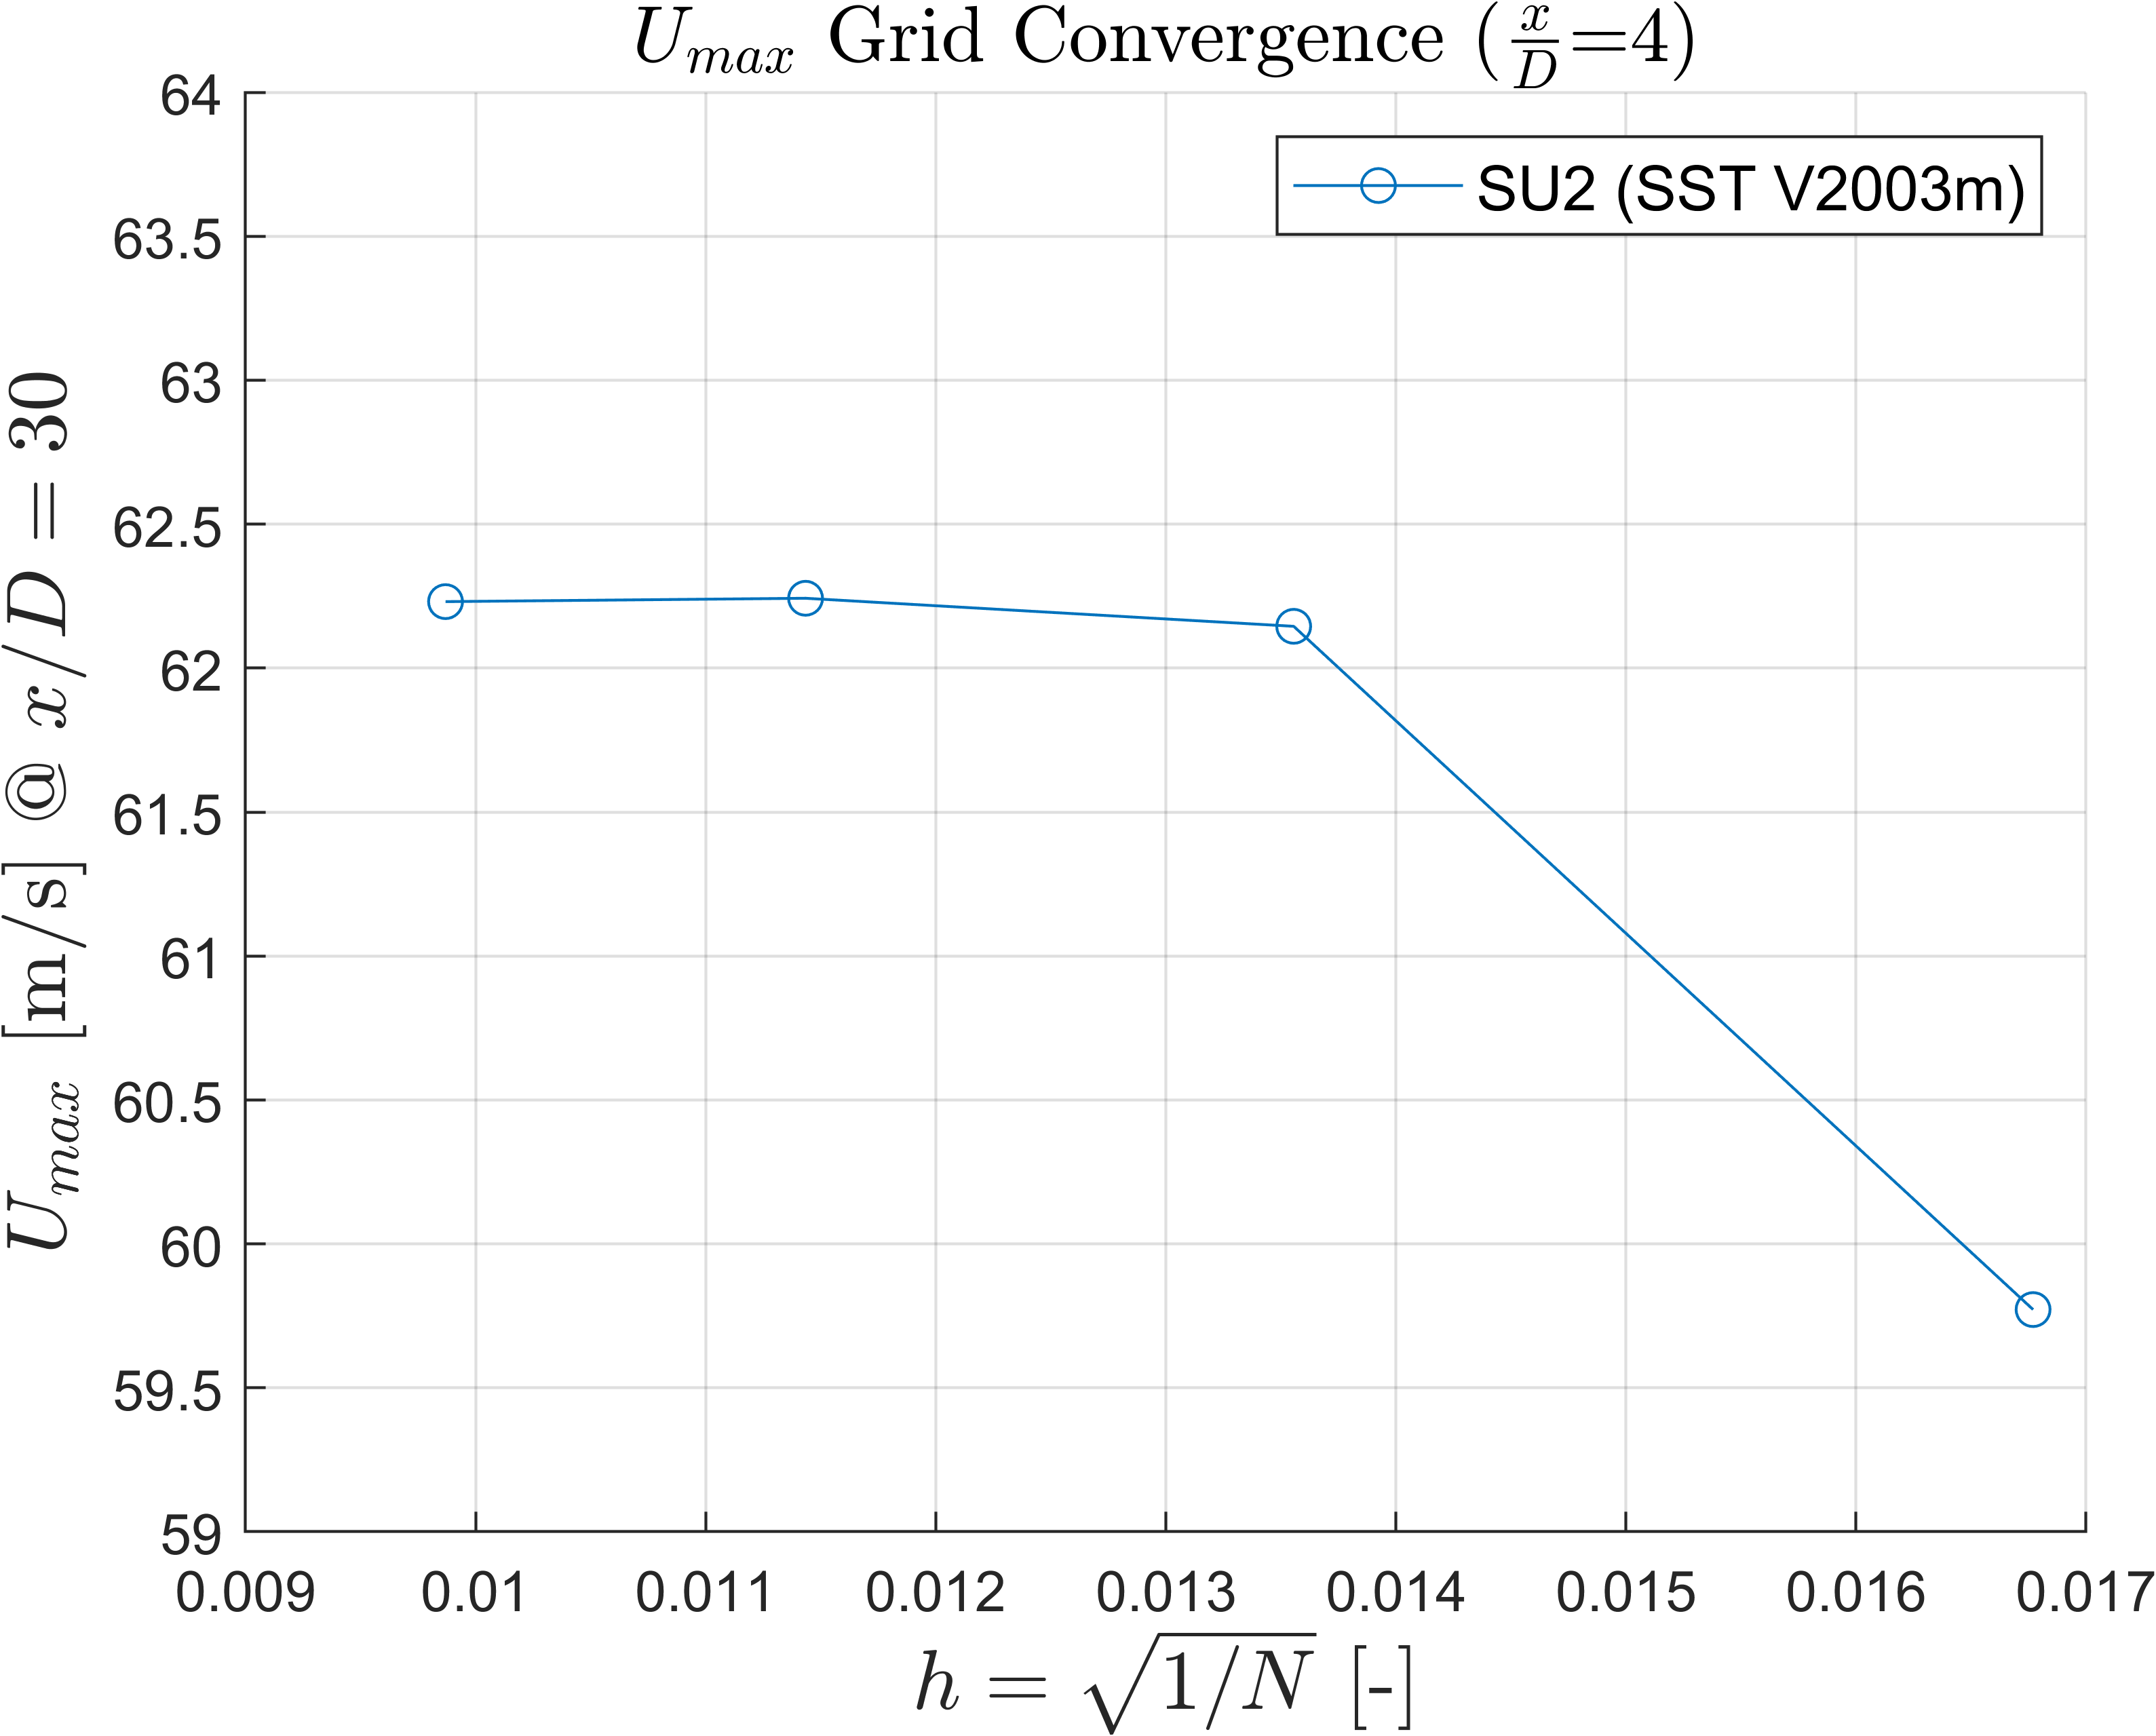 Velocity Grid Convergence x/D=4